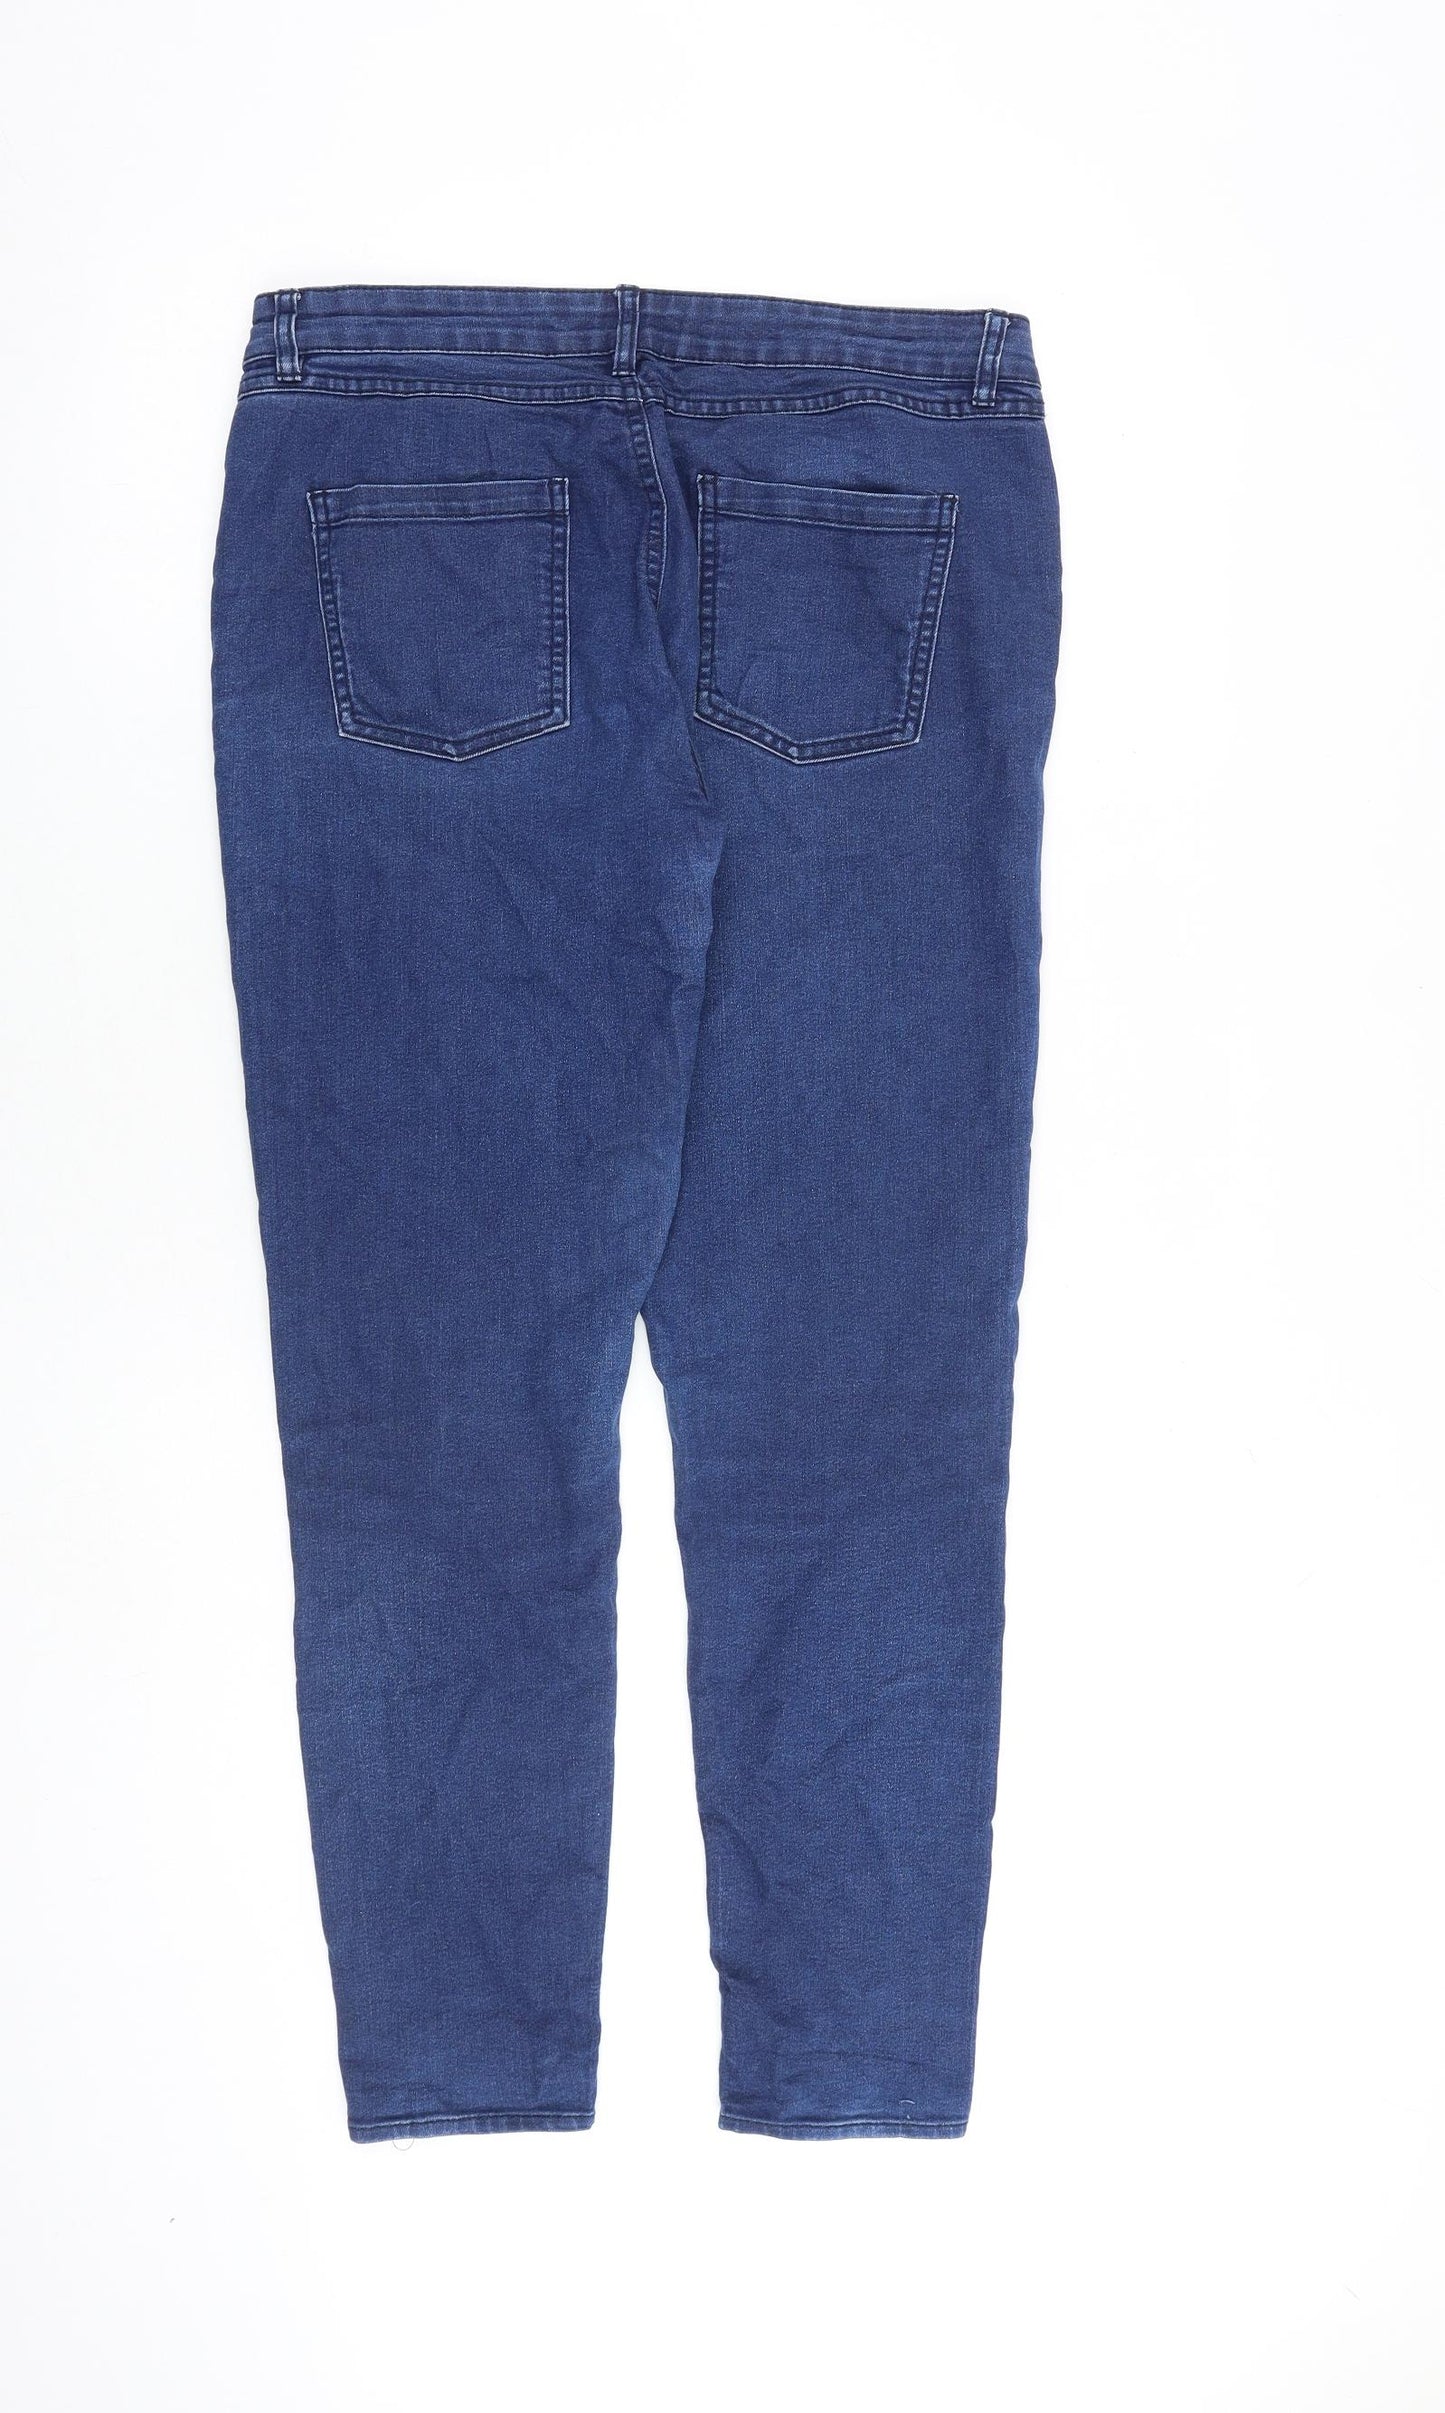 Avenue Womens Blue Cotton Skinny Jeans Size 12 L28 in Regular Zip